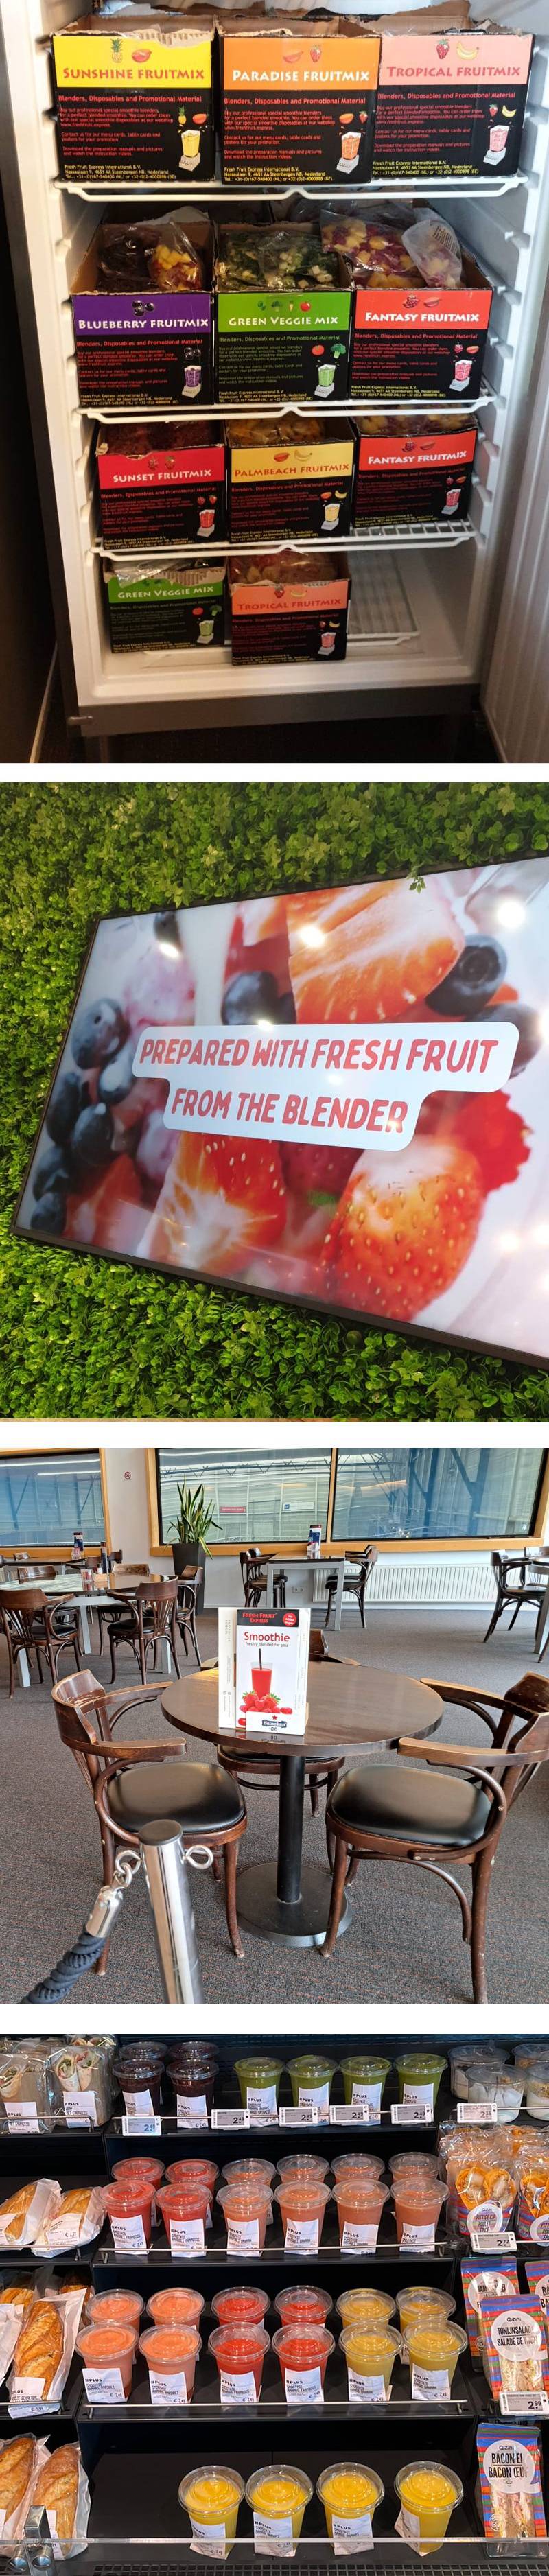 fresh fruit express concept collage impression